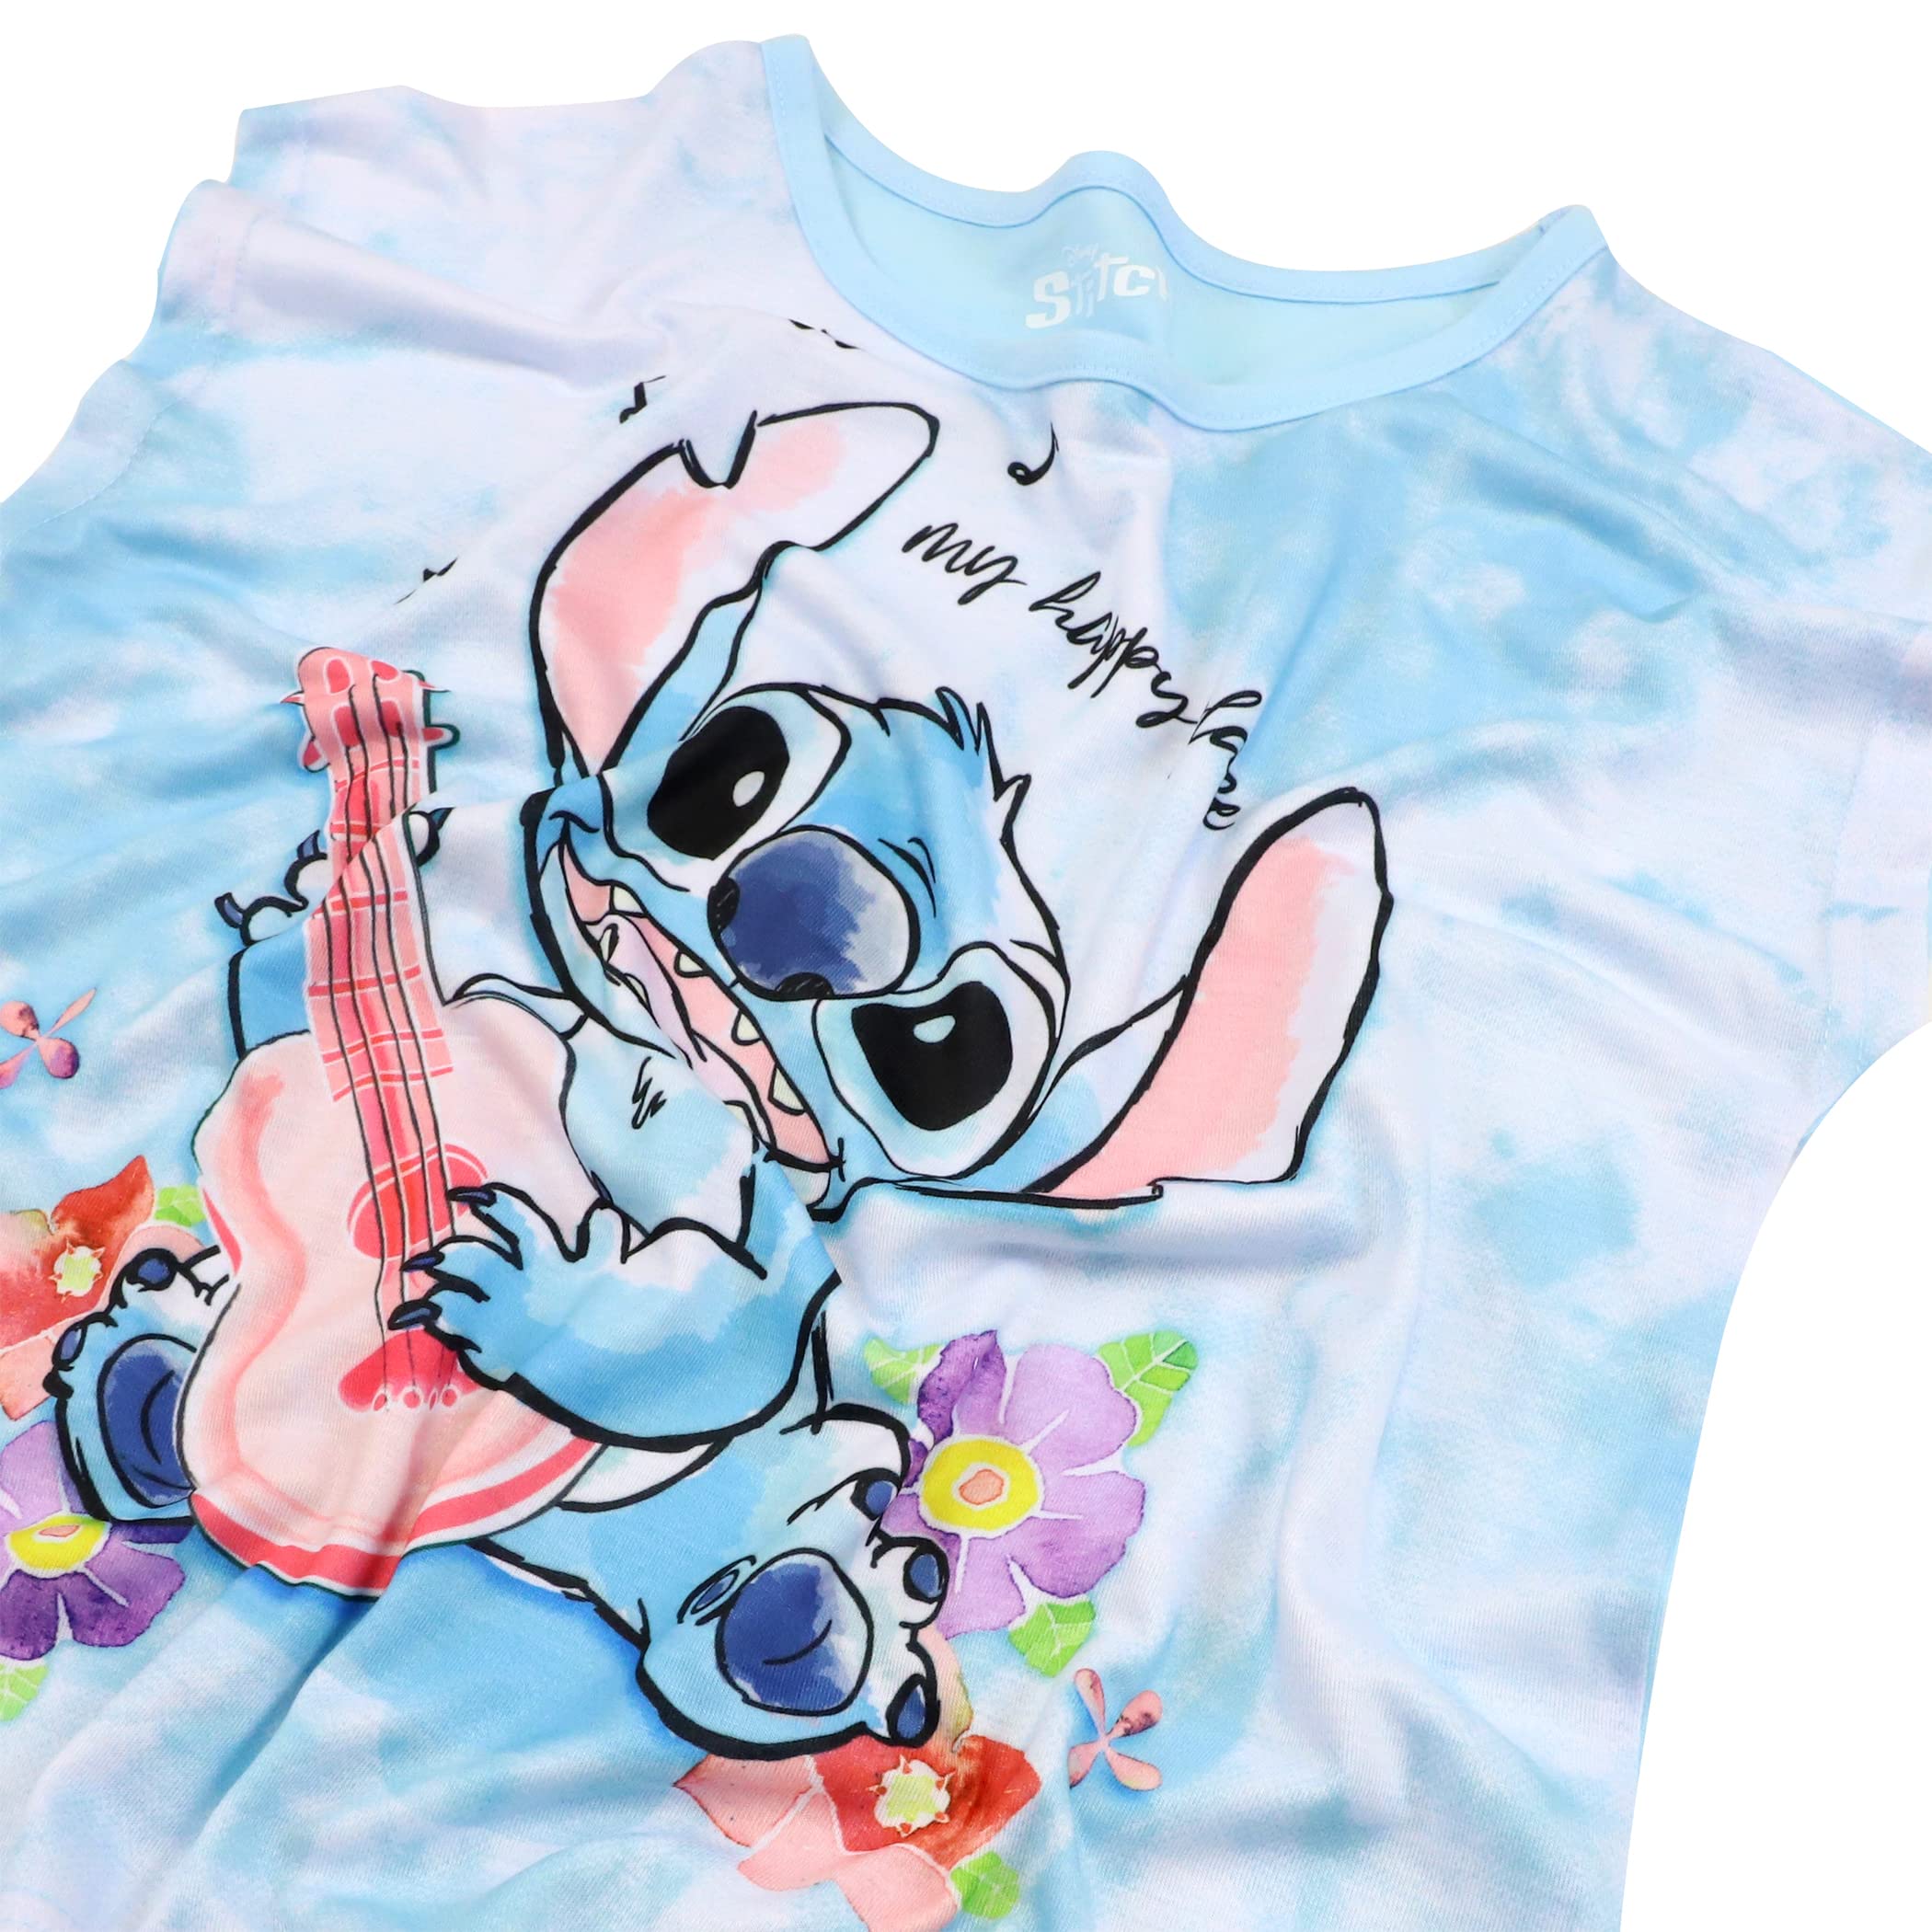 Disney Girls' Lilo & Stitch 2-Piece Loose-Fit Pajamas Set, MY HAPPY PLACE, 6